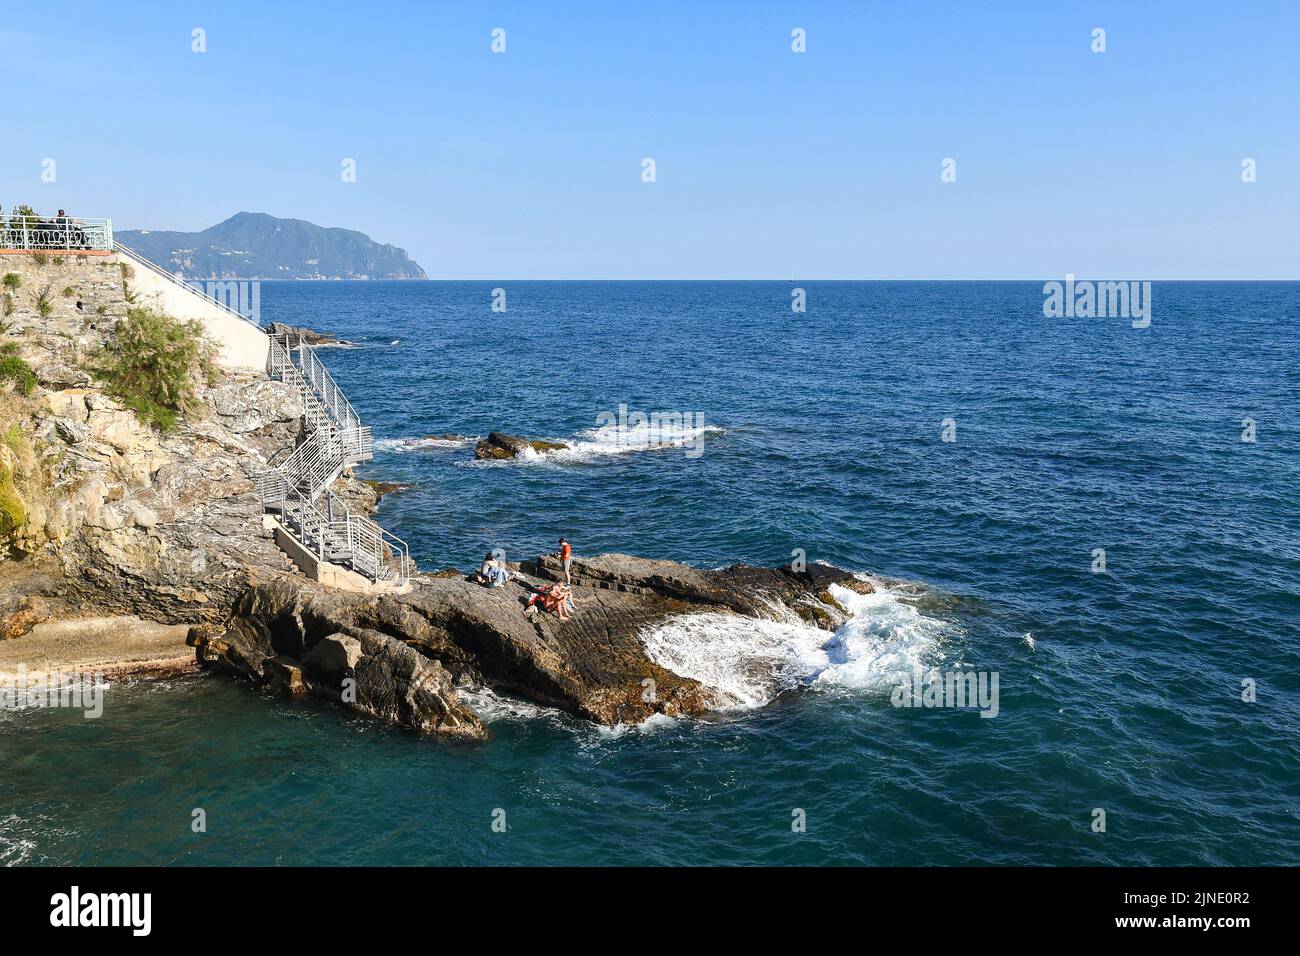 People sunbathing on the rocks by the sea of the Anita Garibaldi Promenade with the promontory of Portofino in the background, Nervi, Genoa, Liguria Stock Photo